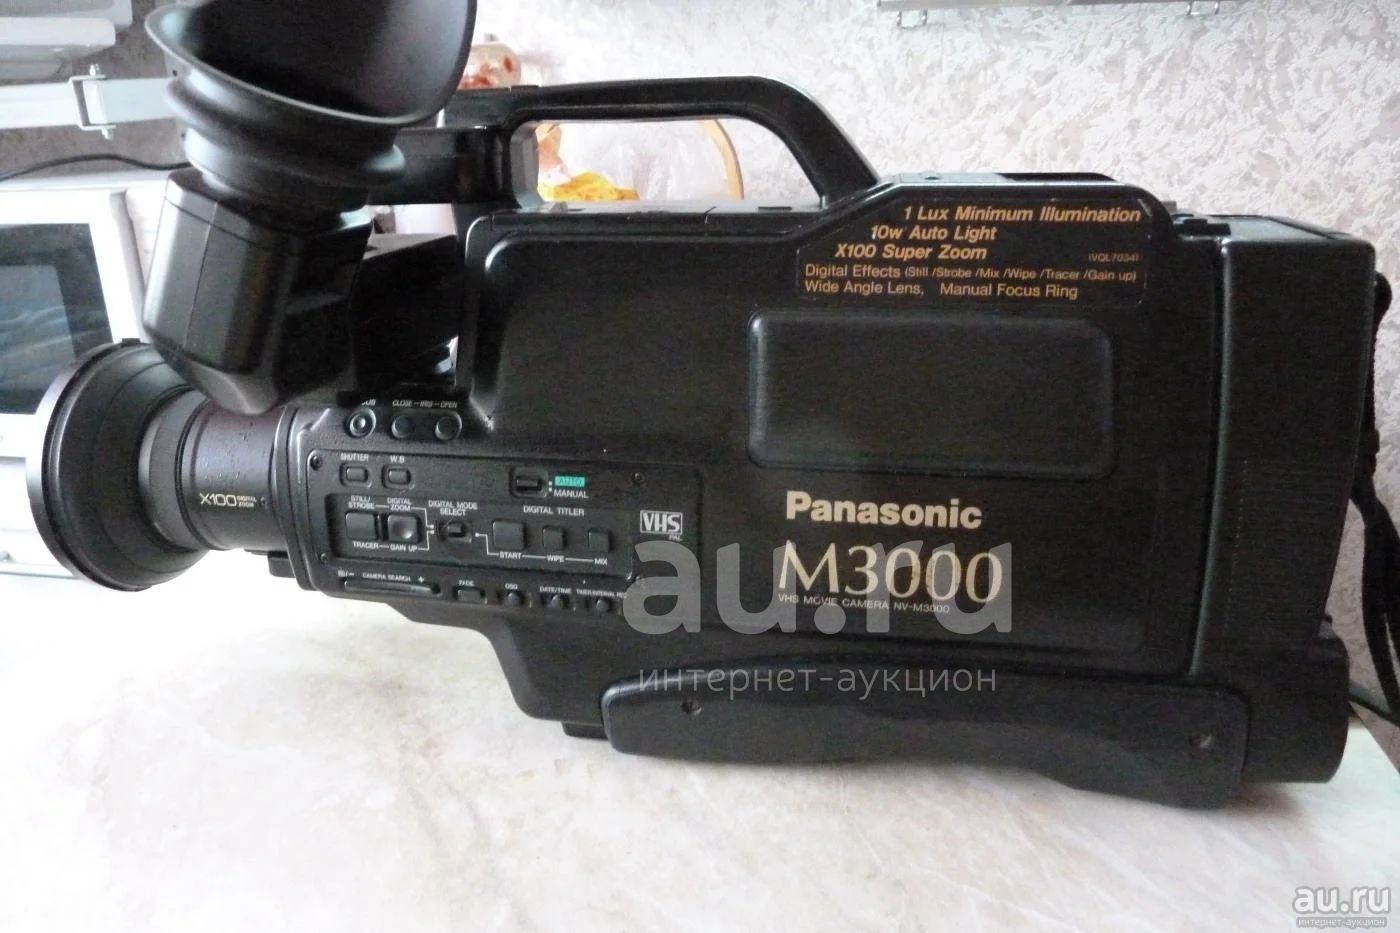 Panasonic m3000. Панасоник м3000 видеокамера. Panasonic 3000 видеокамера VHS. Видеокамера Panasonic m3000. Кассетная видеокамера Панасоник м 3000.